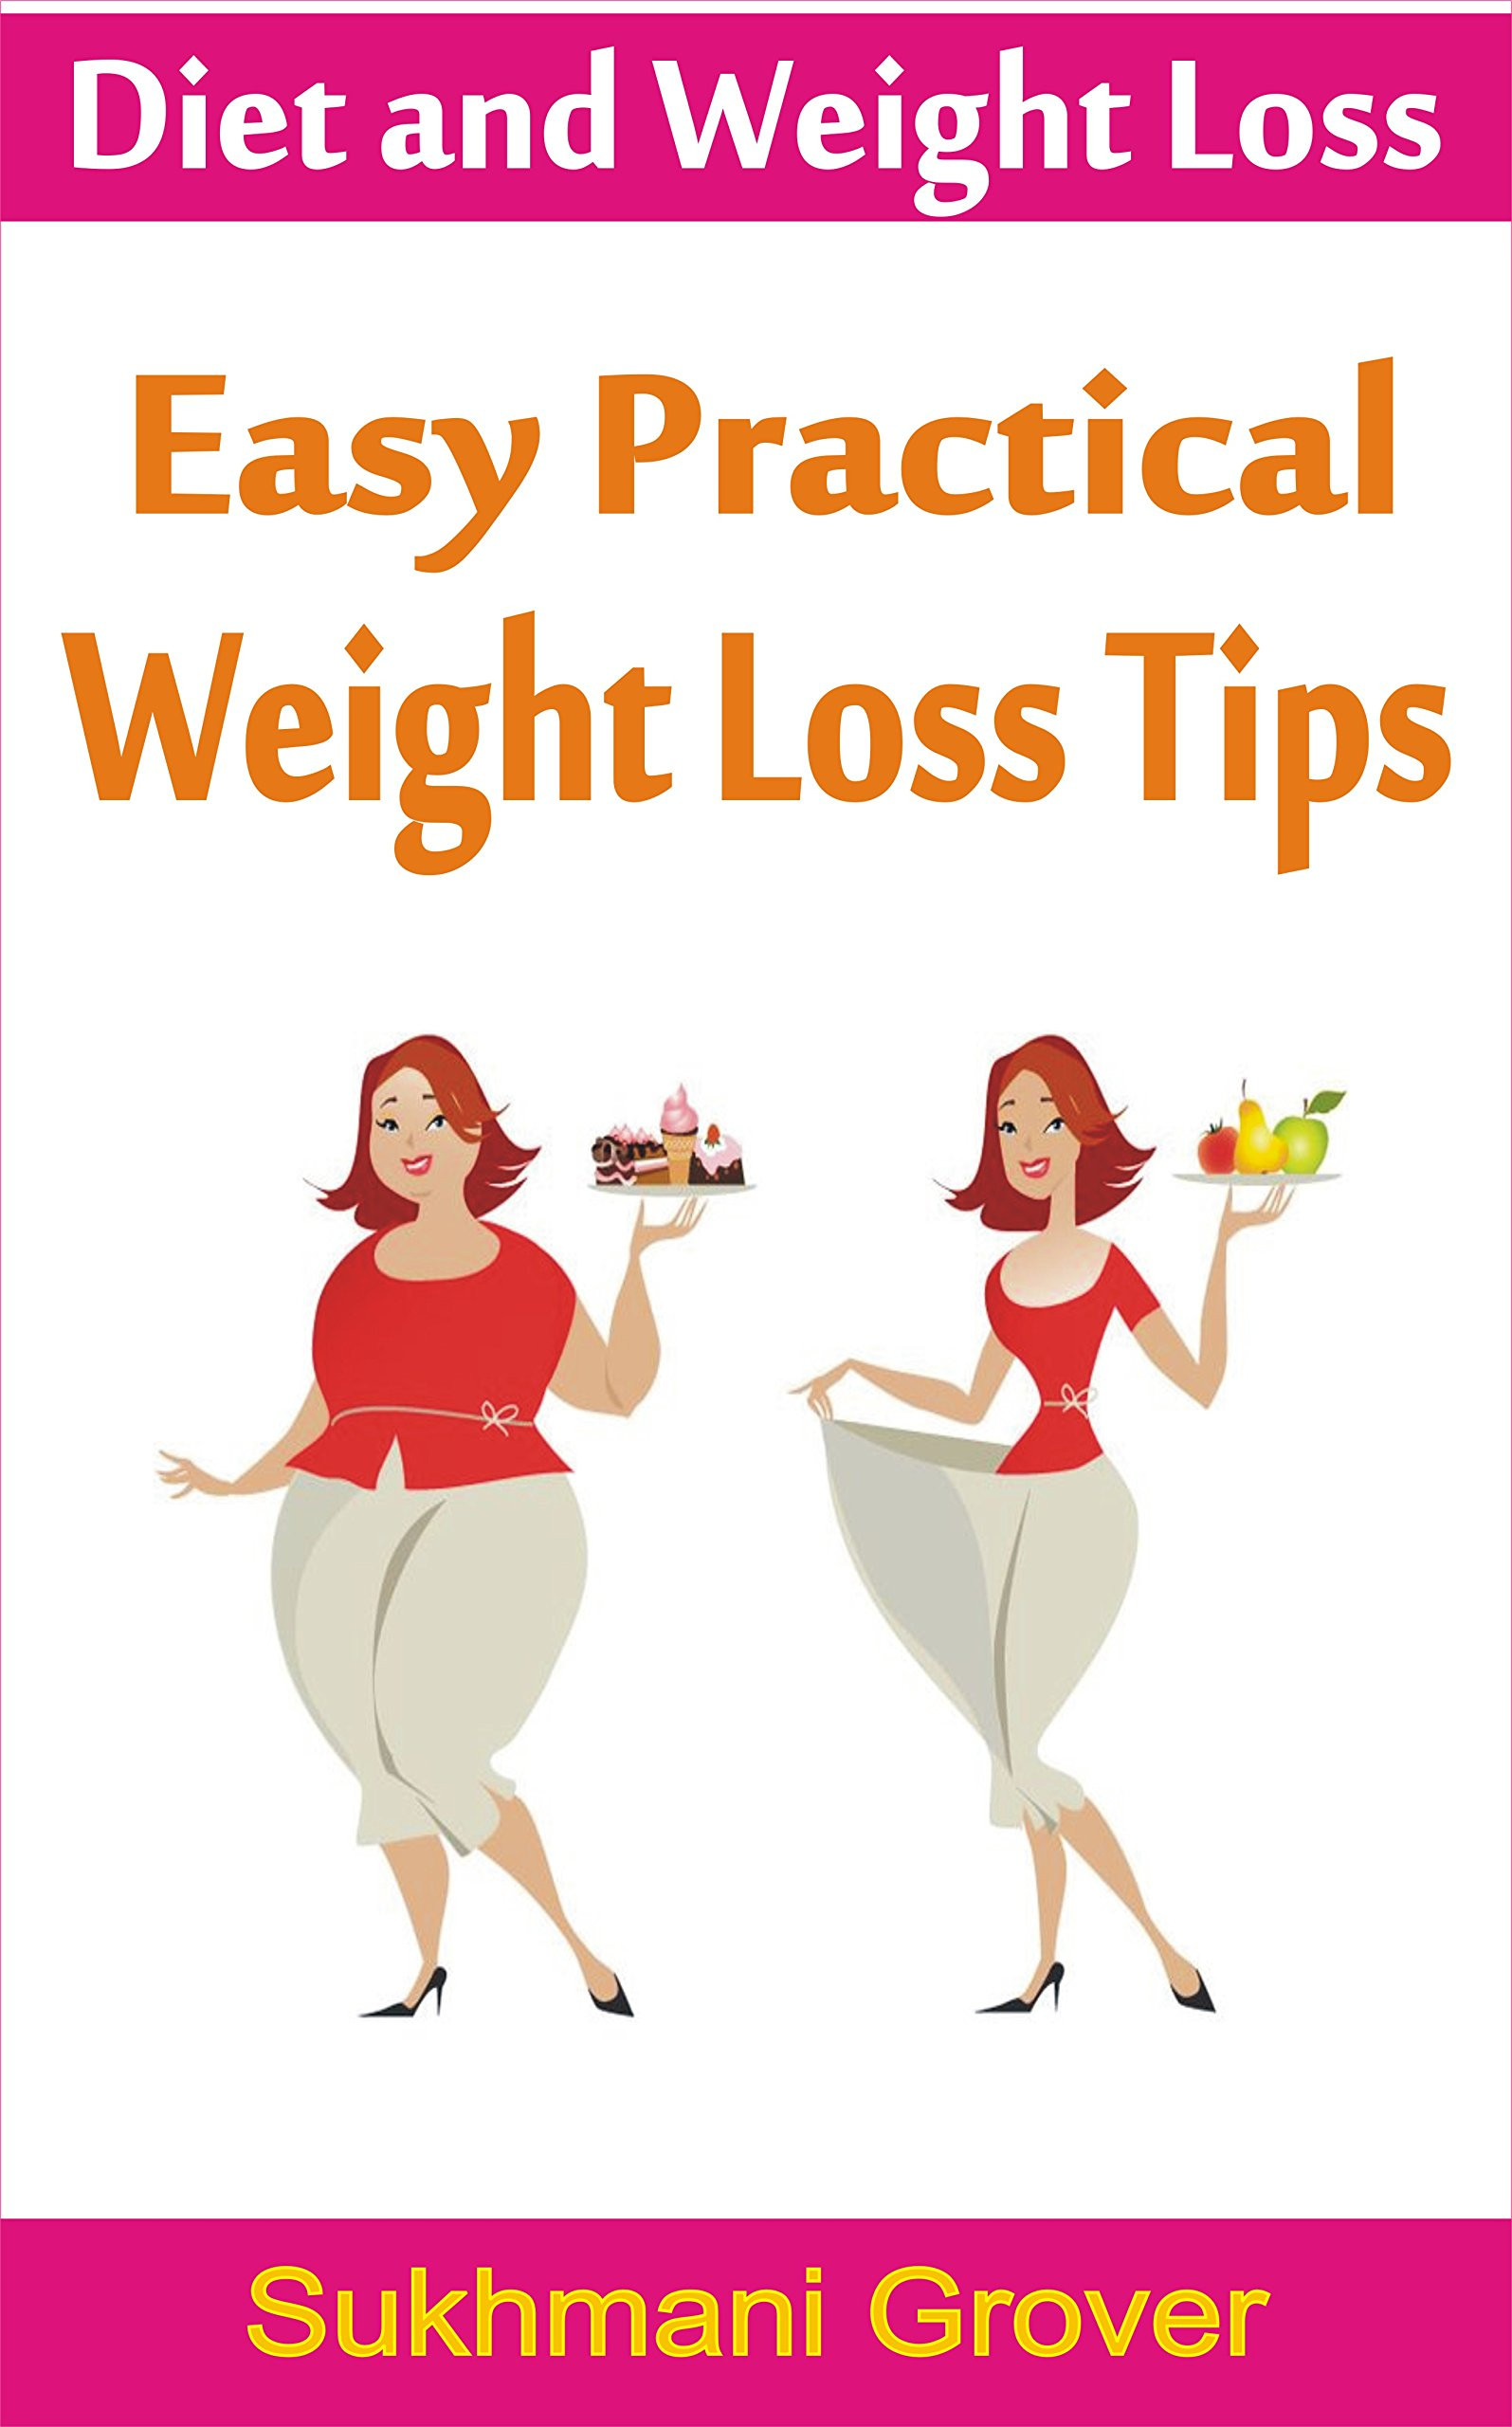 Quick Weight Loss Tips
 Quick weight loss tips for women TPS